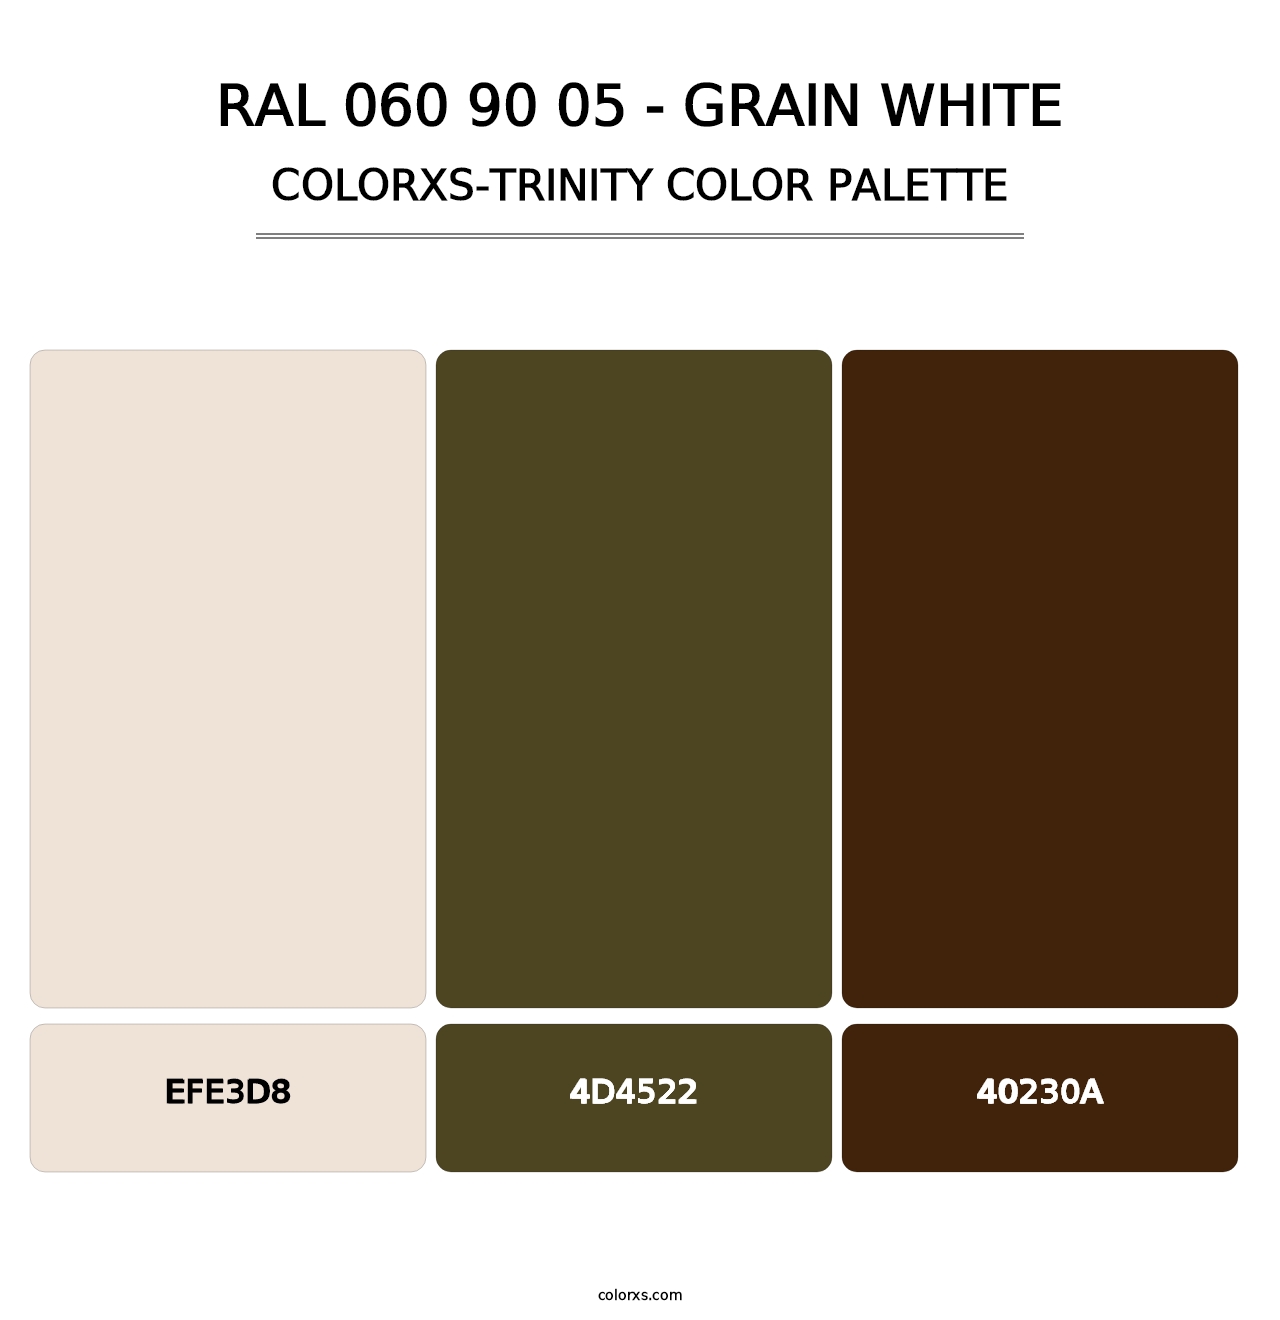 RAL 060 90 05 - Grain White - Colorxs Trinity Palette